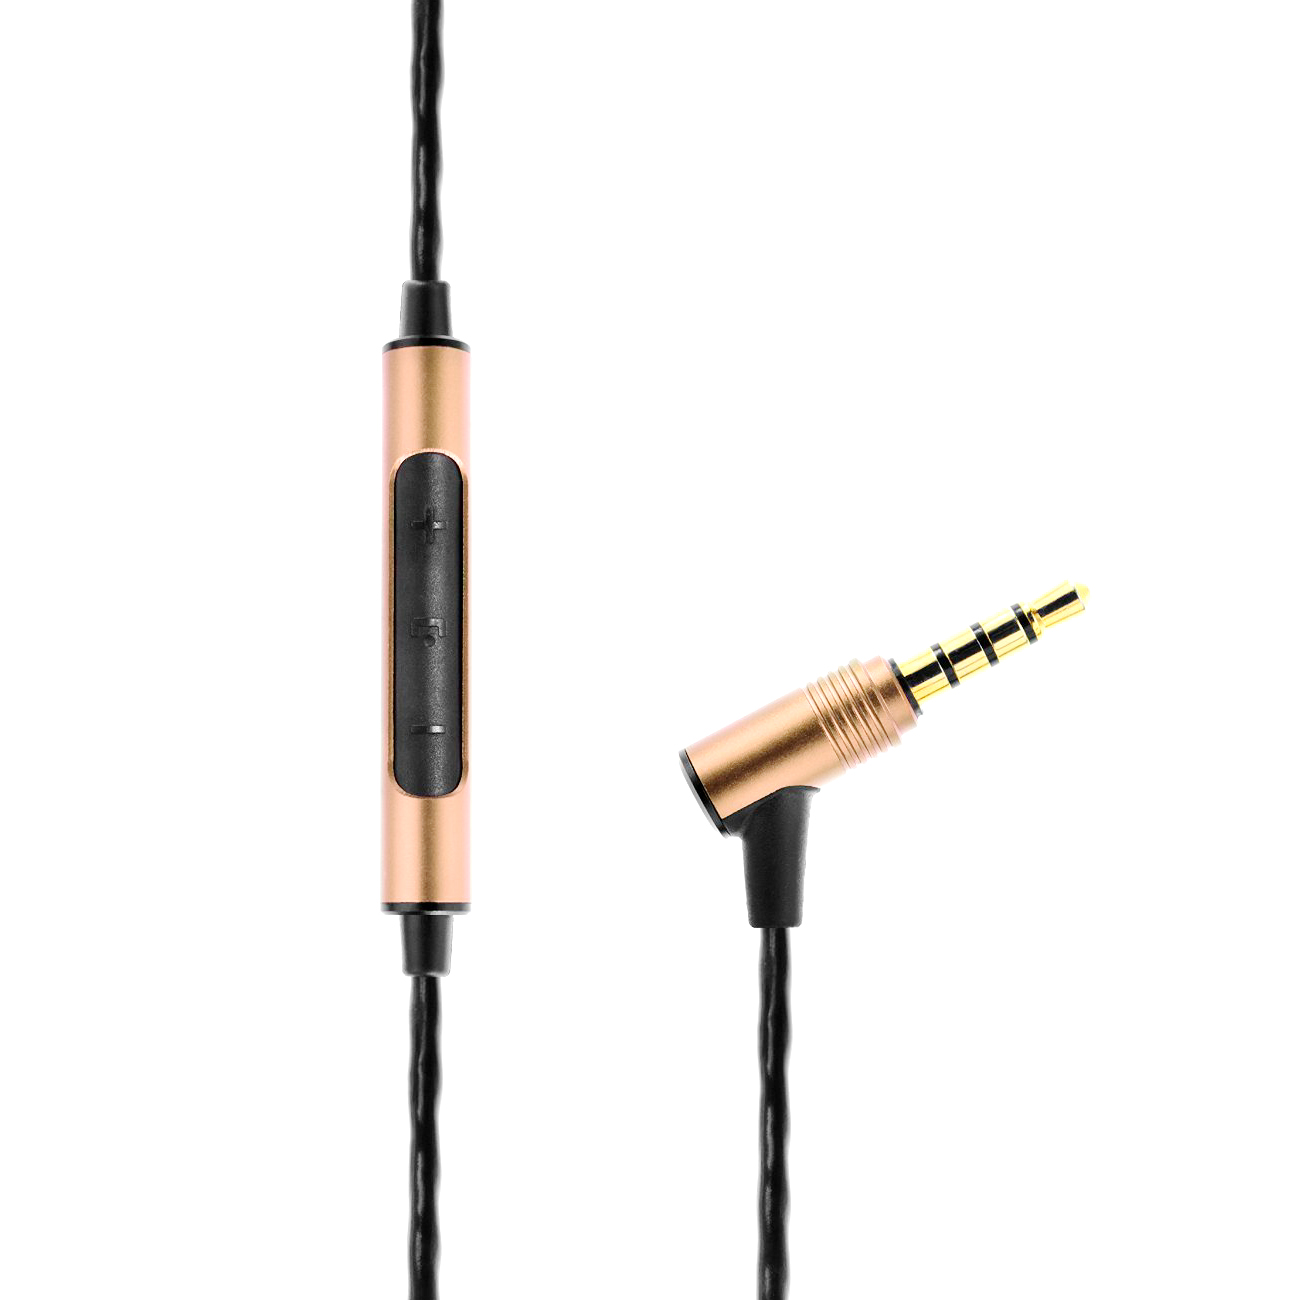 Soundmagic E80C หูฟัง In-Ear Noise Isolating with Microphone มีไมค์ควบคุมเสียง สีทอง ของแท้ ประกันศูนย์ 1ปี (Gold)